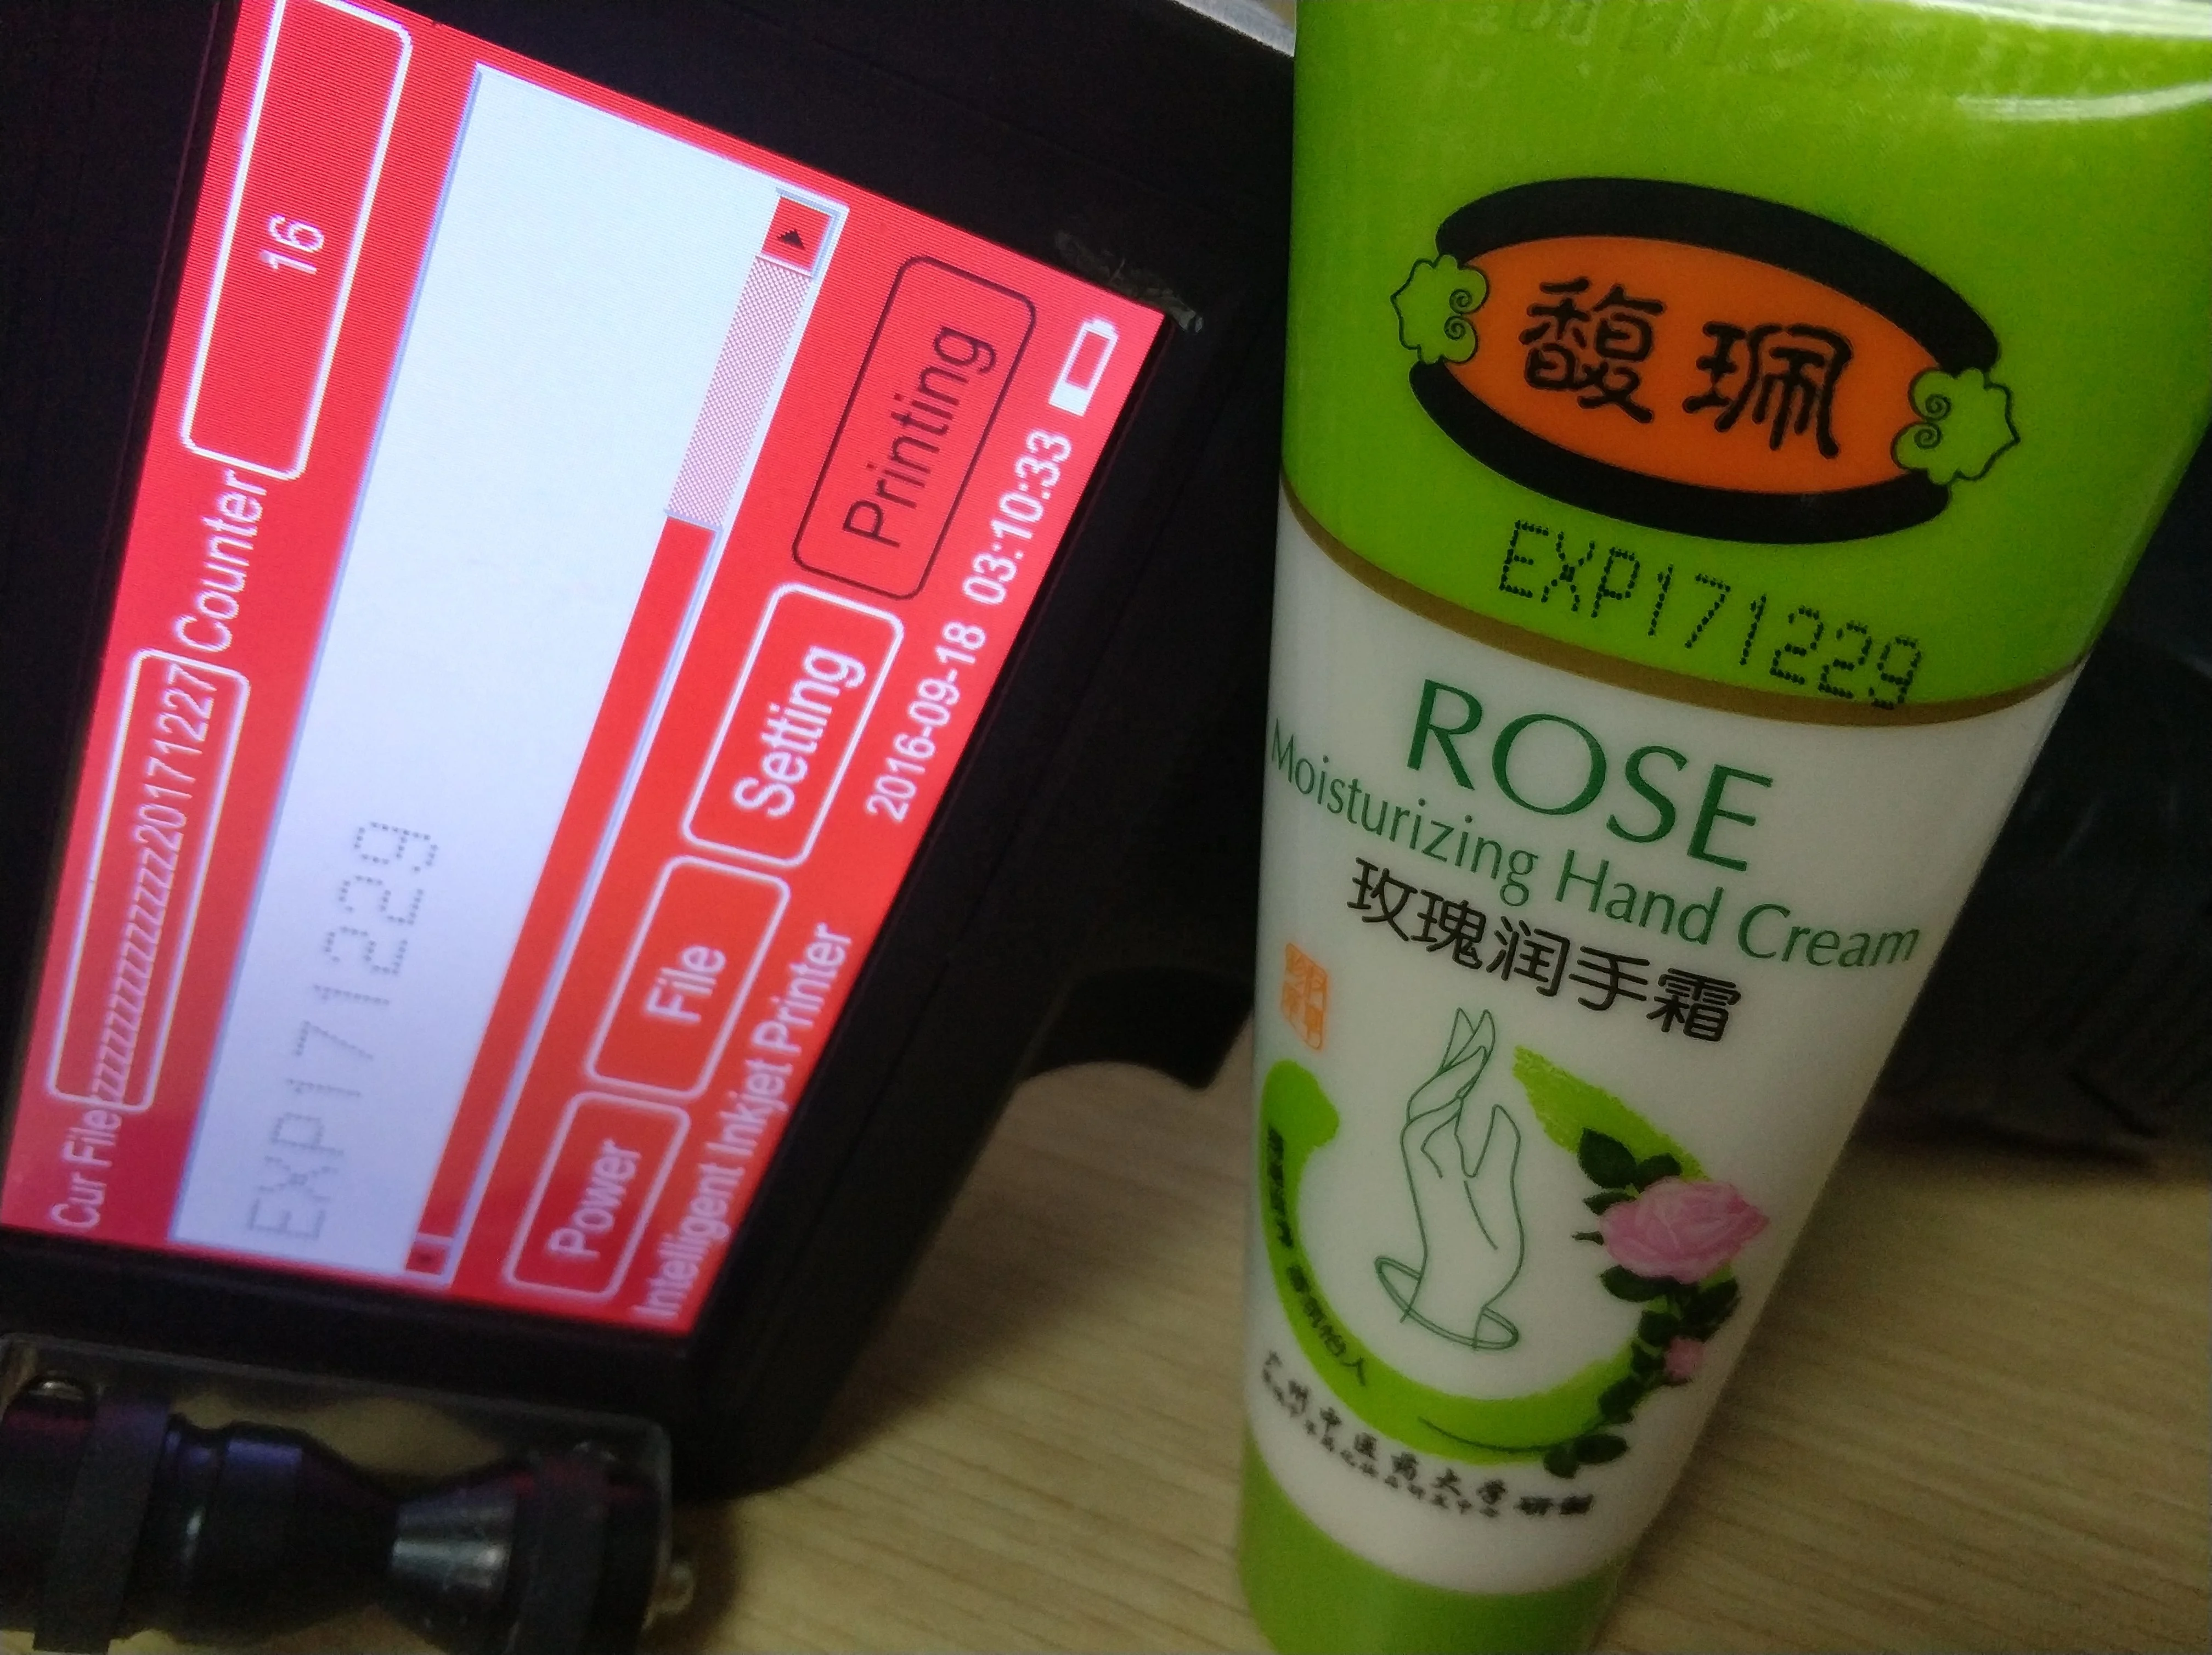 
Portable Handheld Printing Machine Expire Date TIJ handheld inkjet code printer for food package 